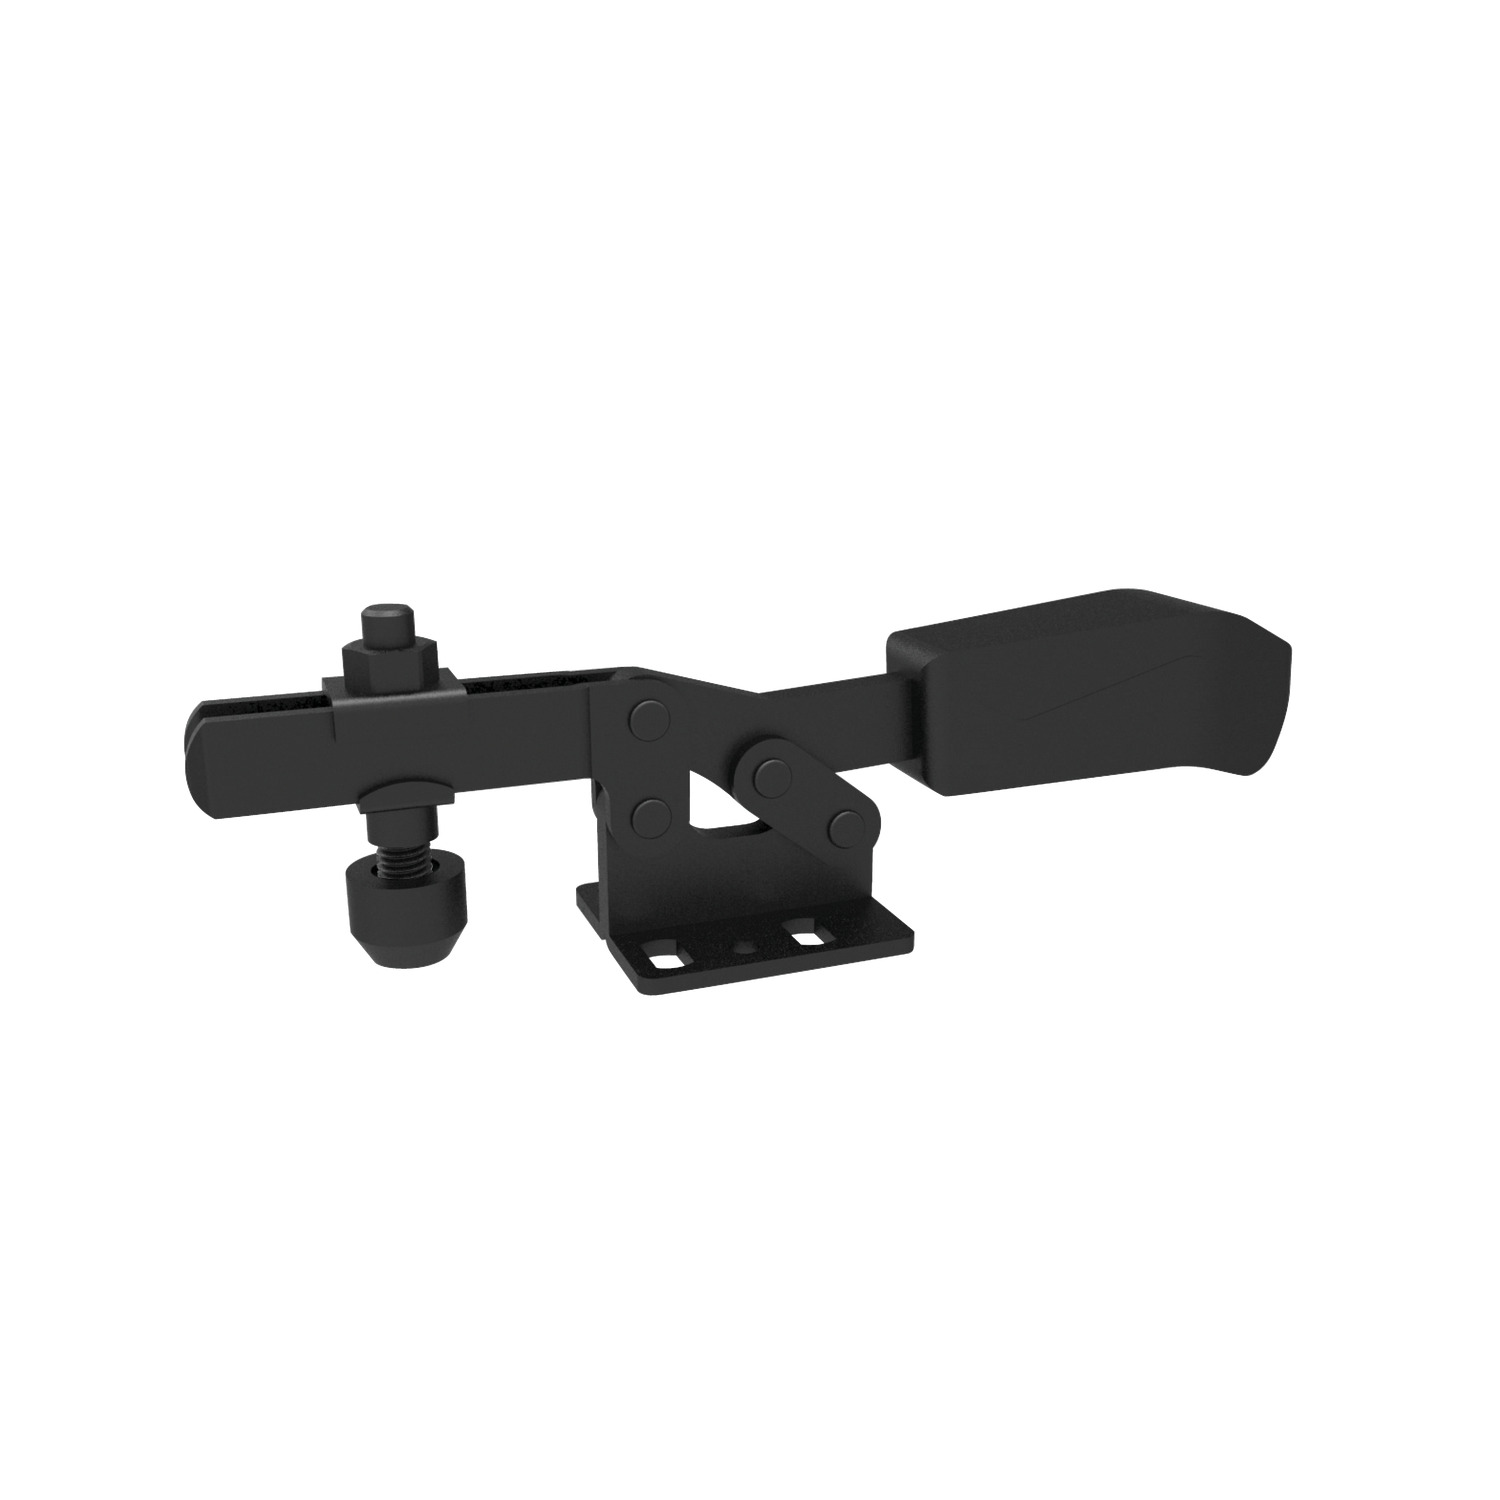 Product 41000.2, Horizontal Acting Toggle Clamps black - open arm - horizontal base / 